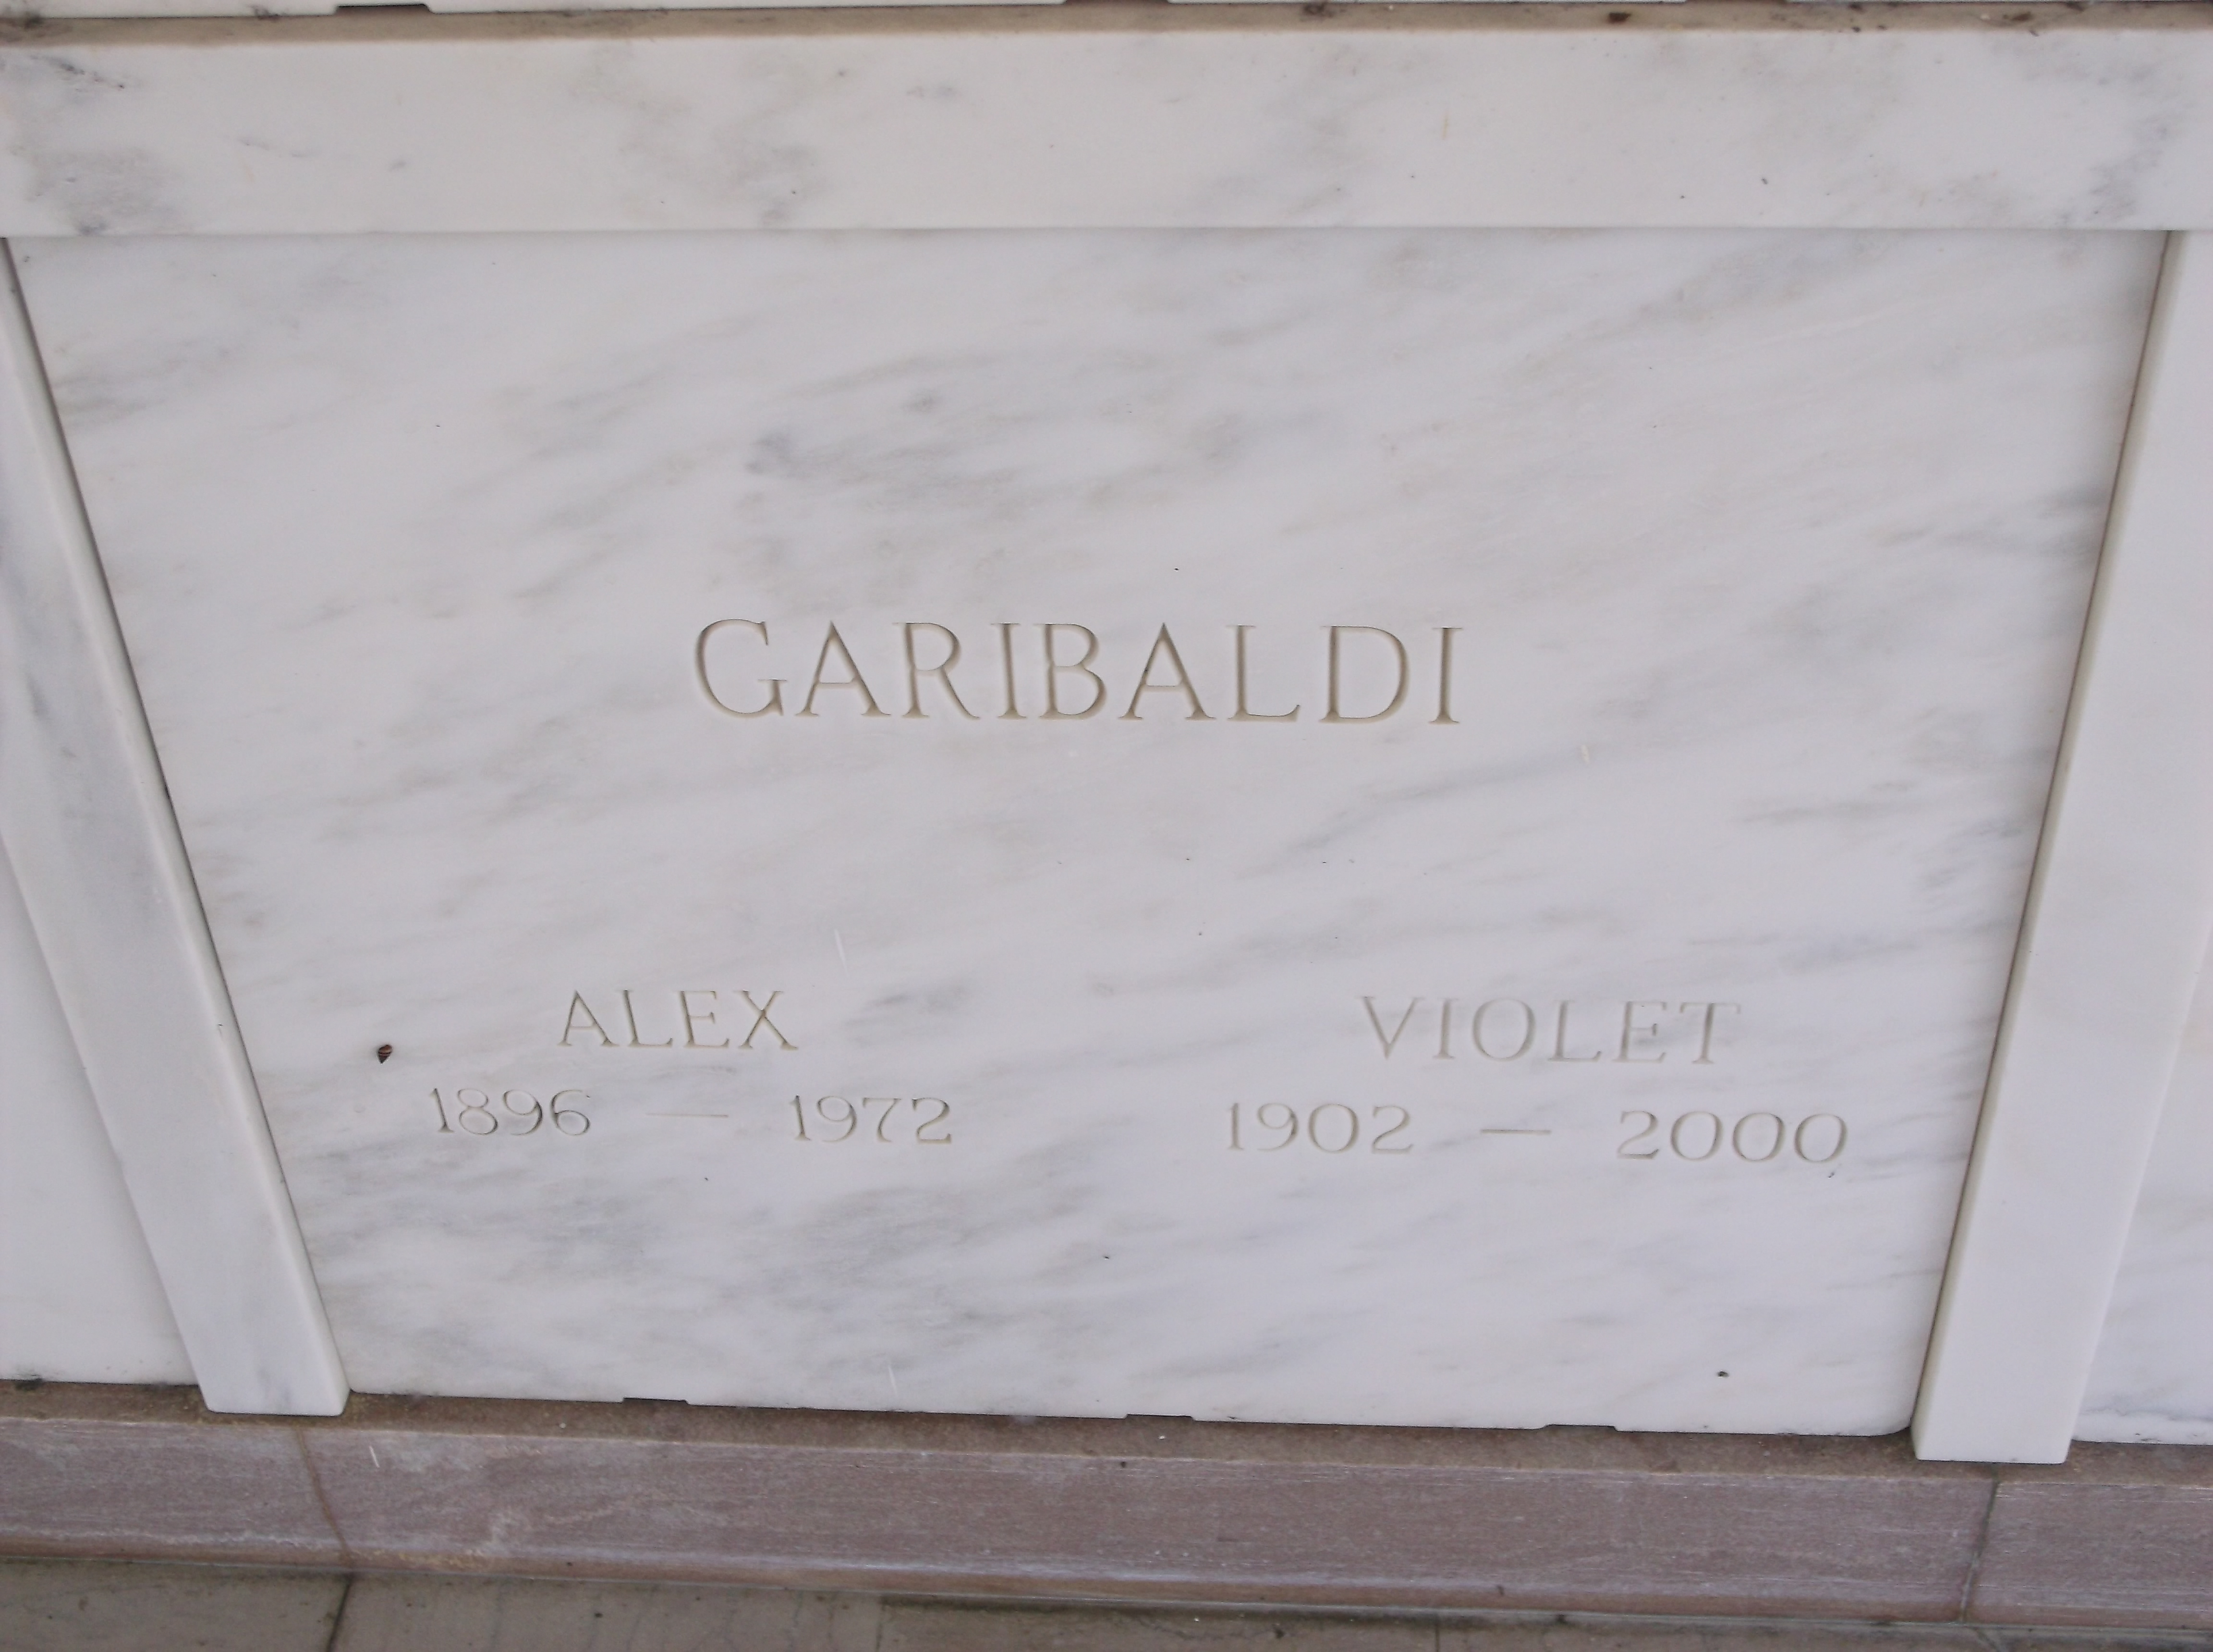 Violet Garibaldi